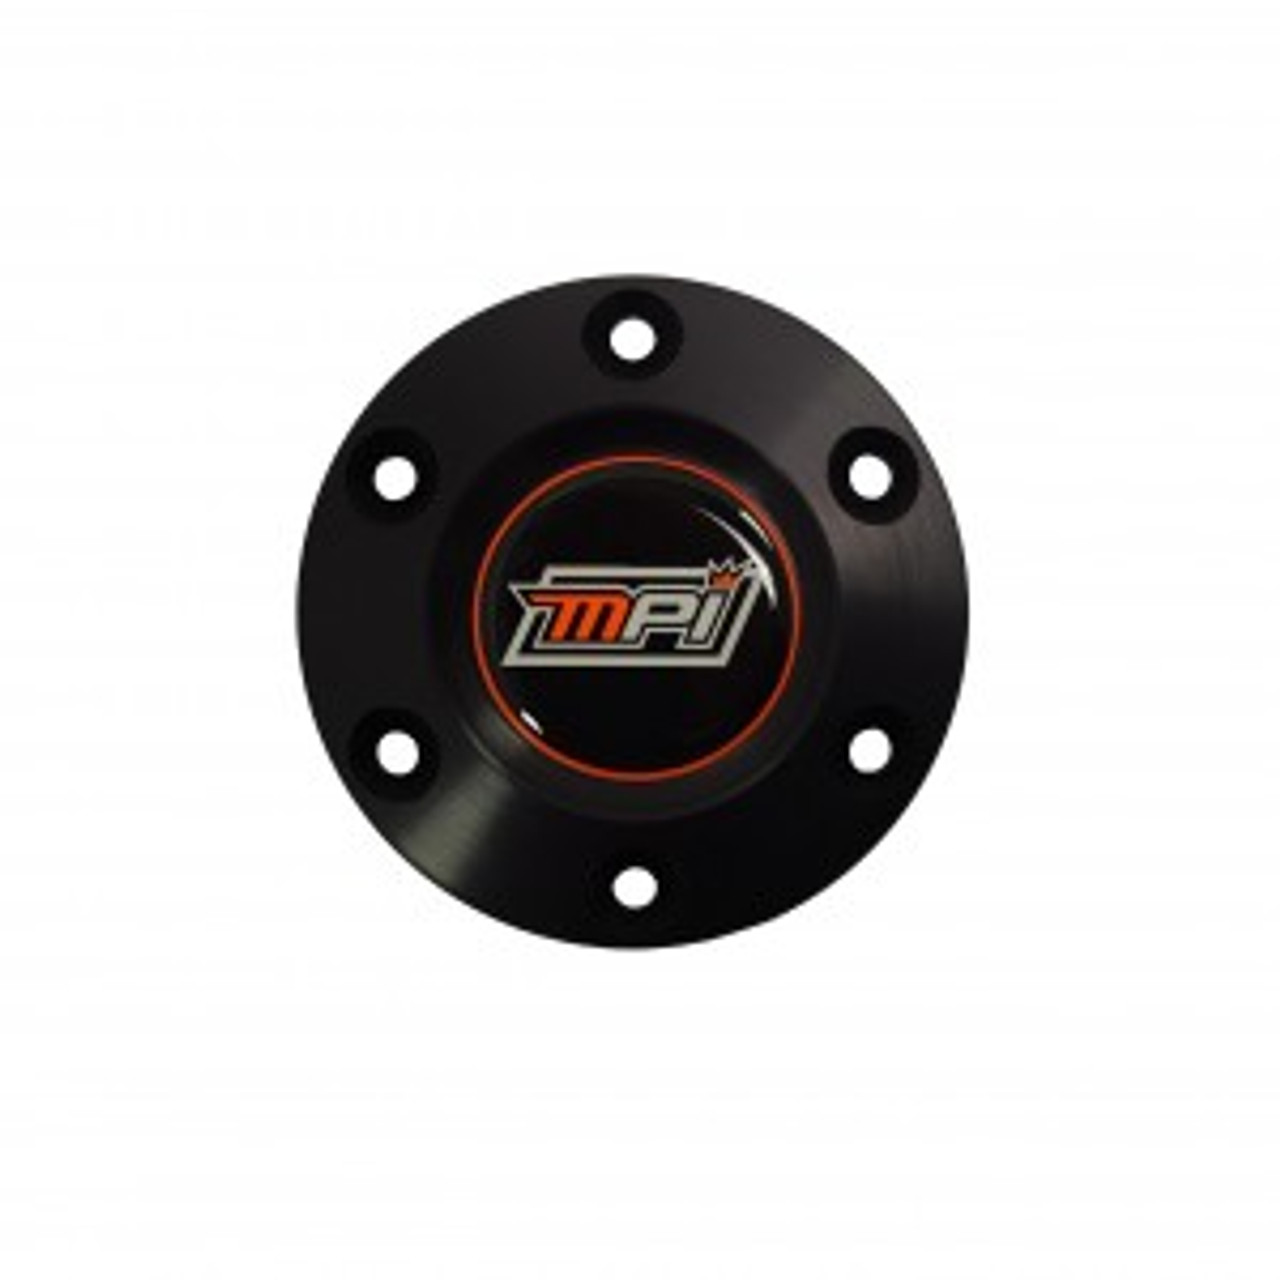 MPI Center Hole Cover for F and DO Model Wheels - MPIMPI-A-CHC